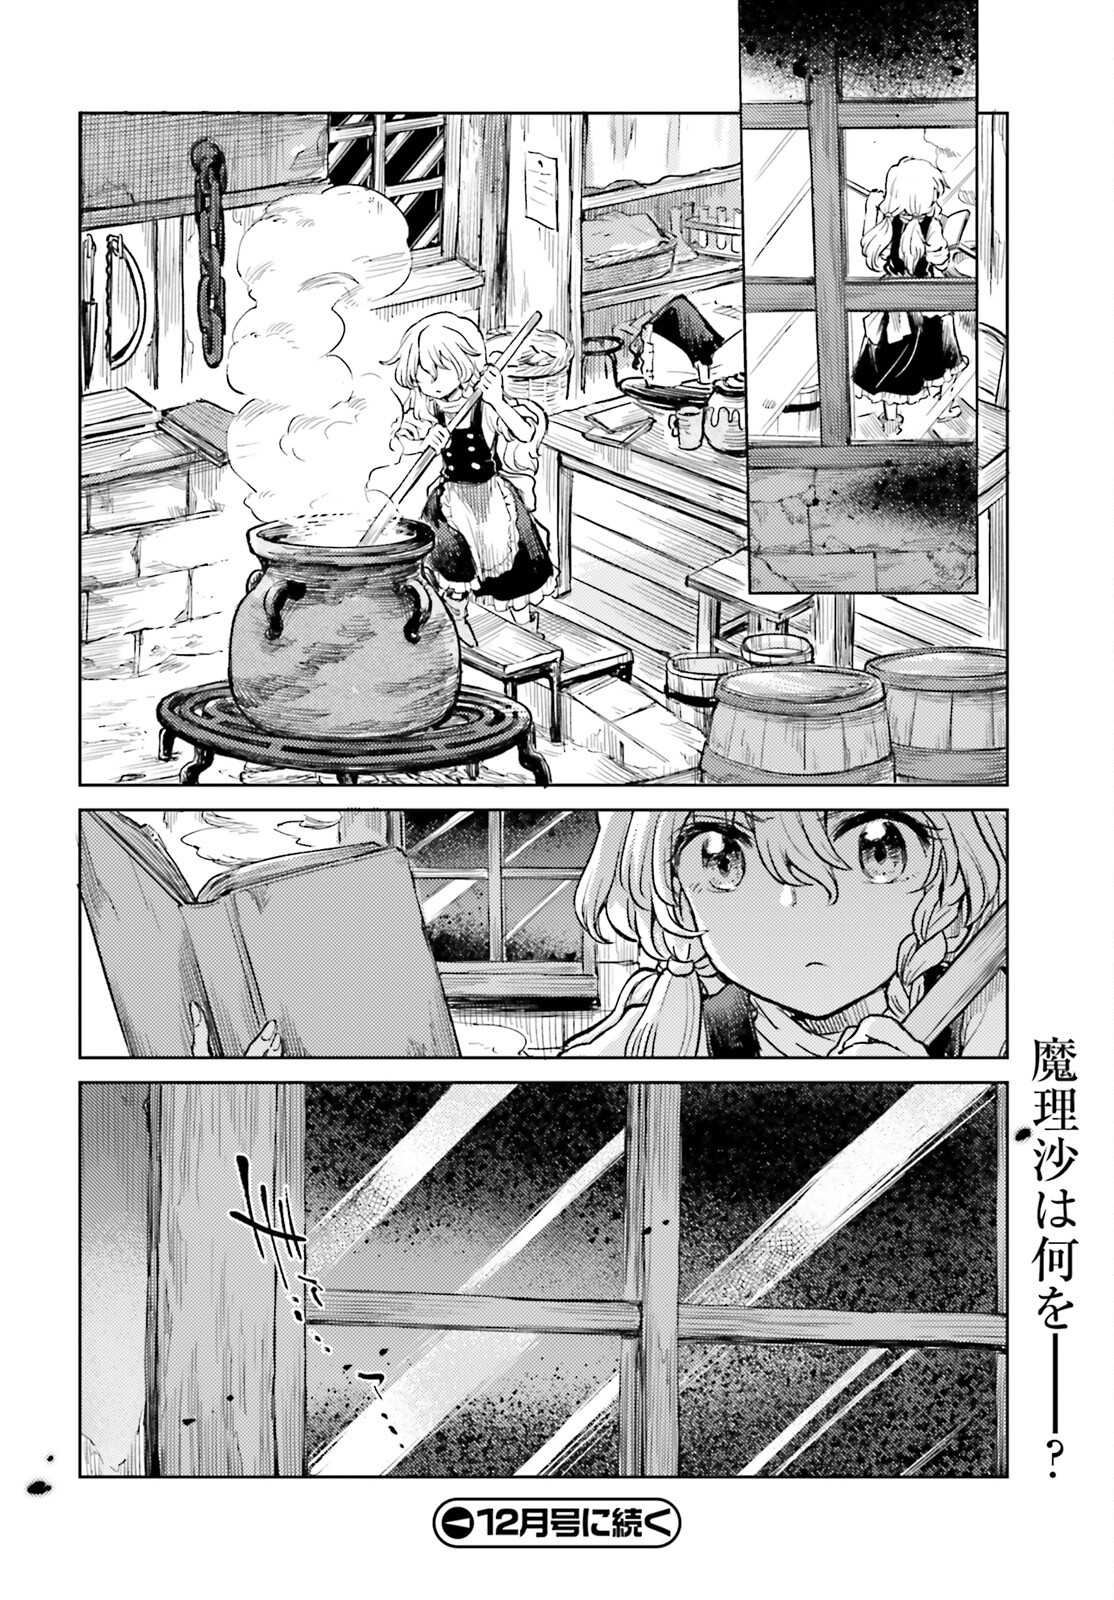 Touhouyoi Chouka Routasuiitaa-tachi no Yoiza - Chapter 45.1 - Page 16